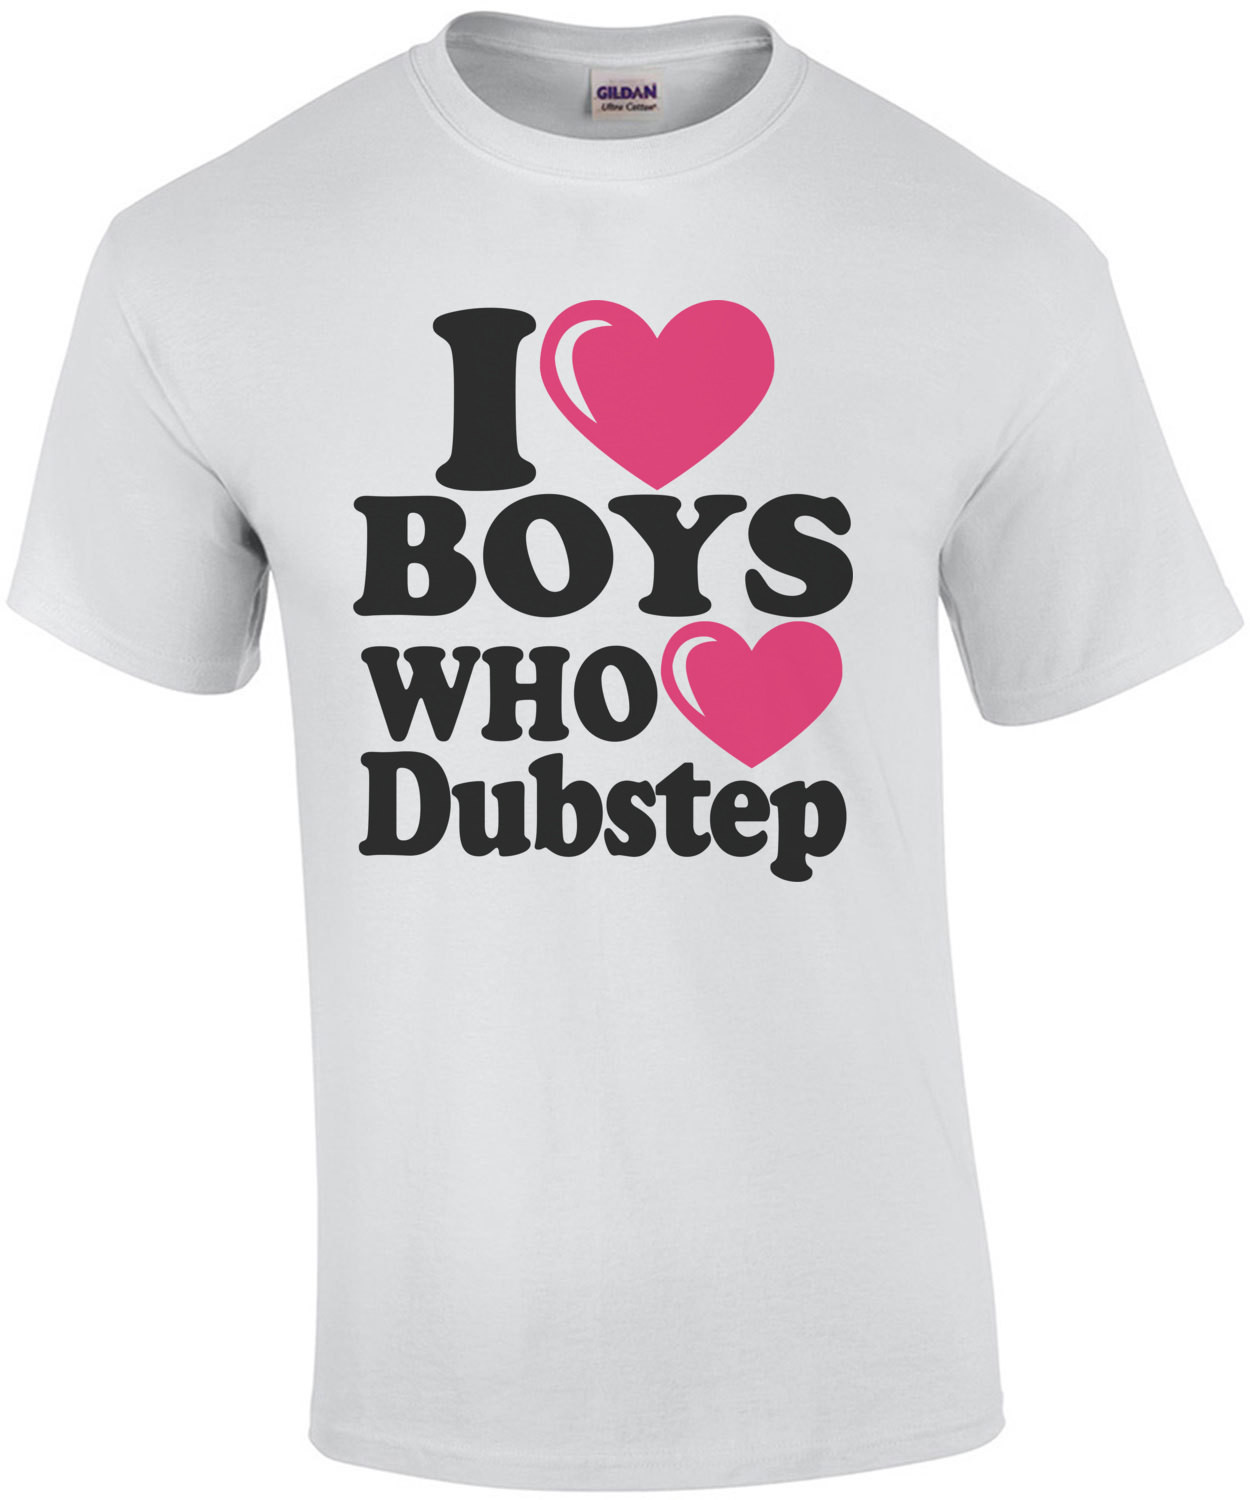 I Heart Boys Who Dubstep T-Shirt